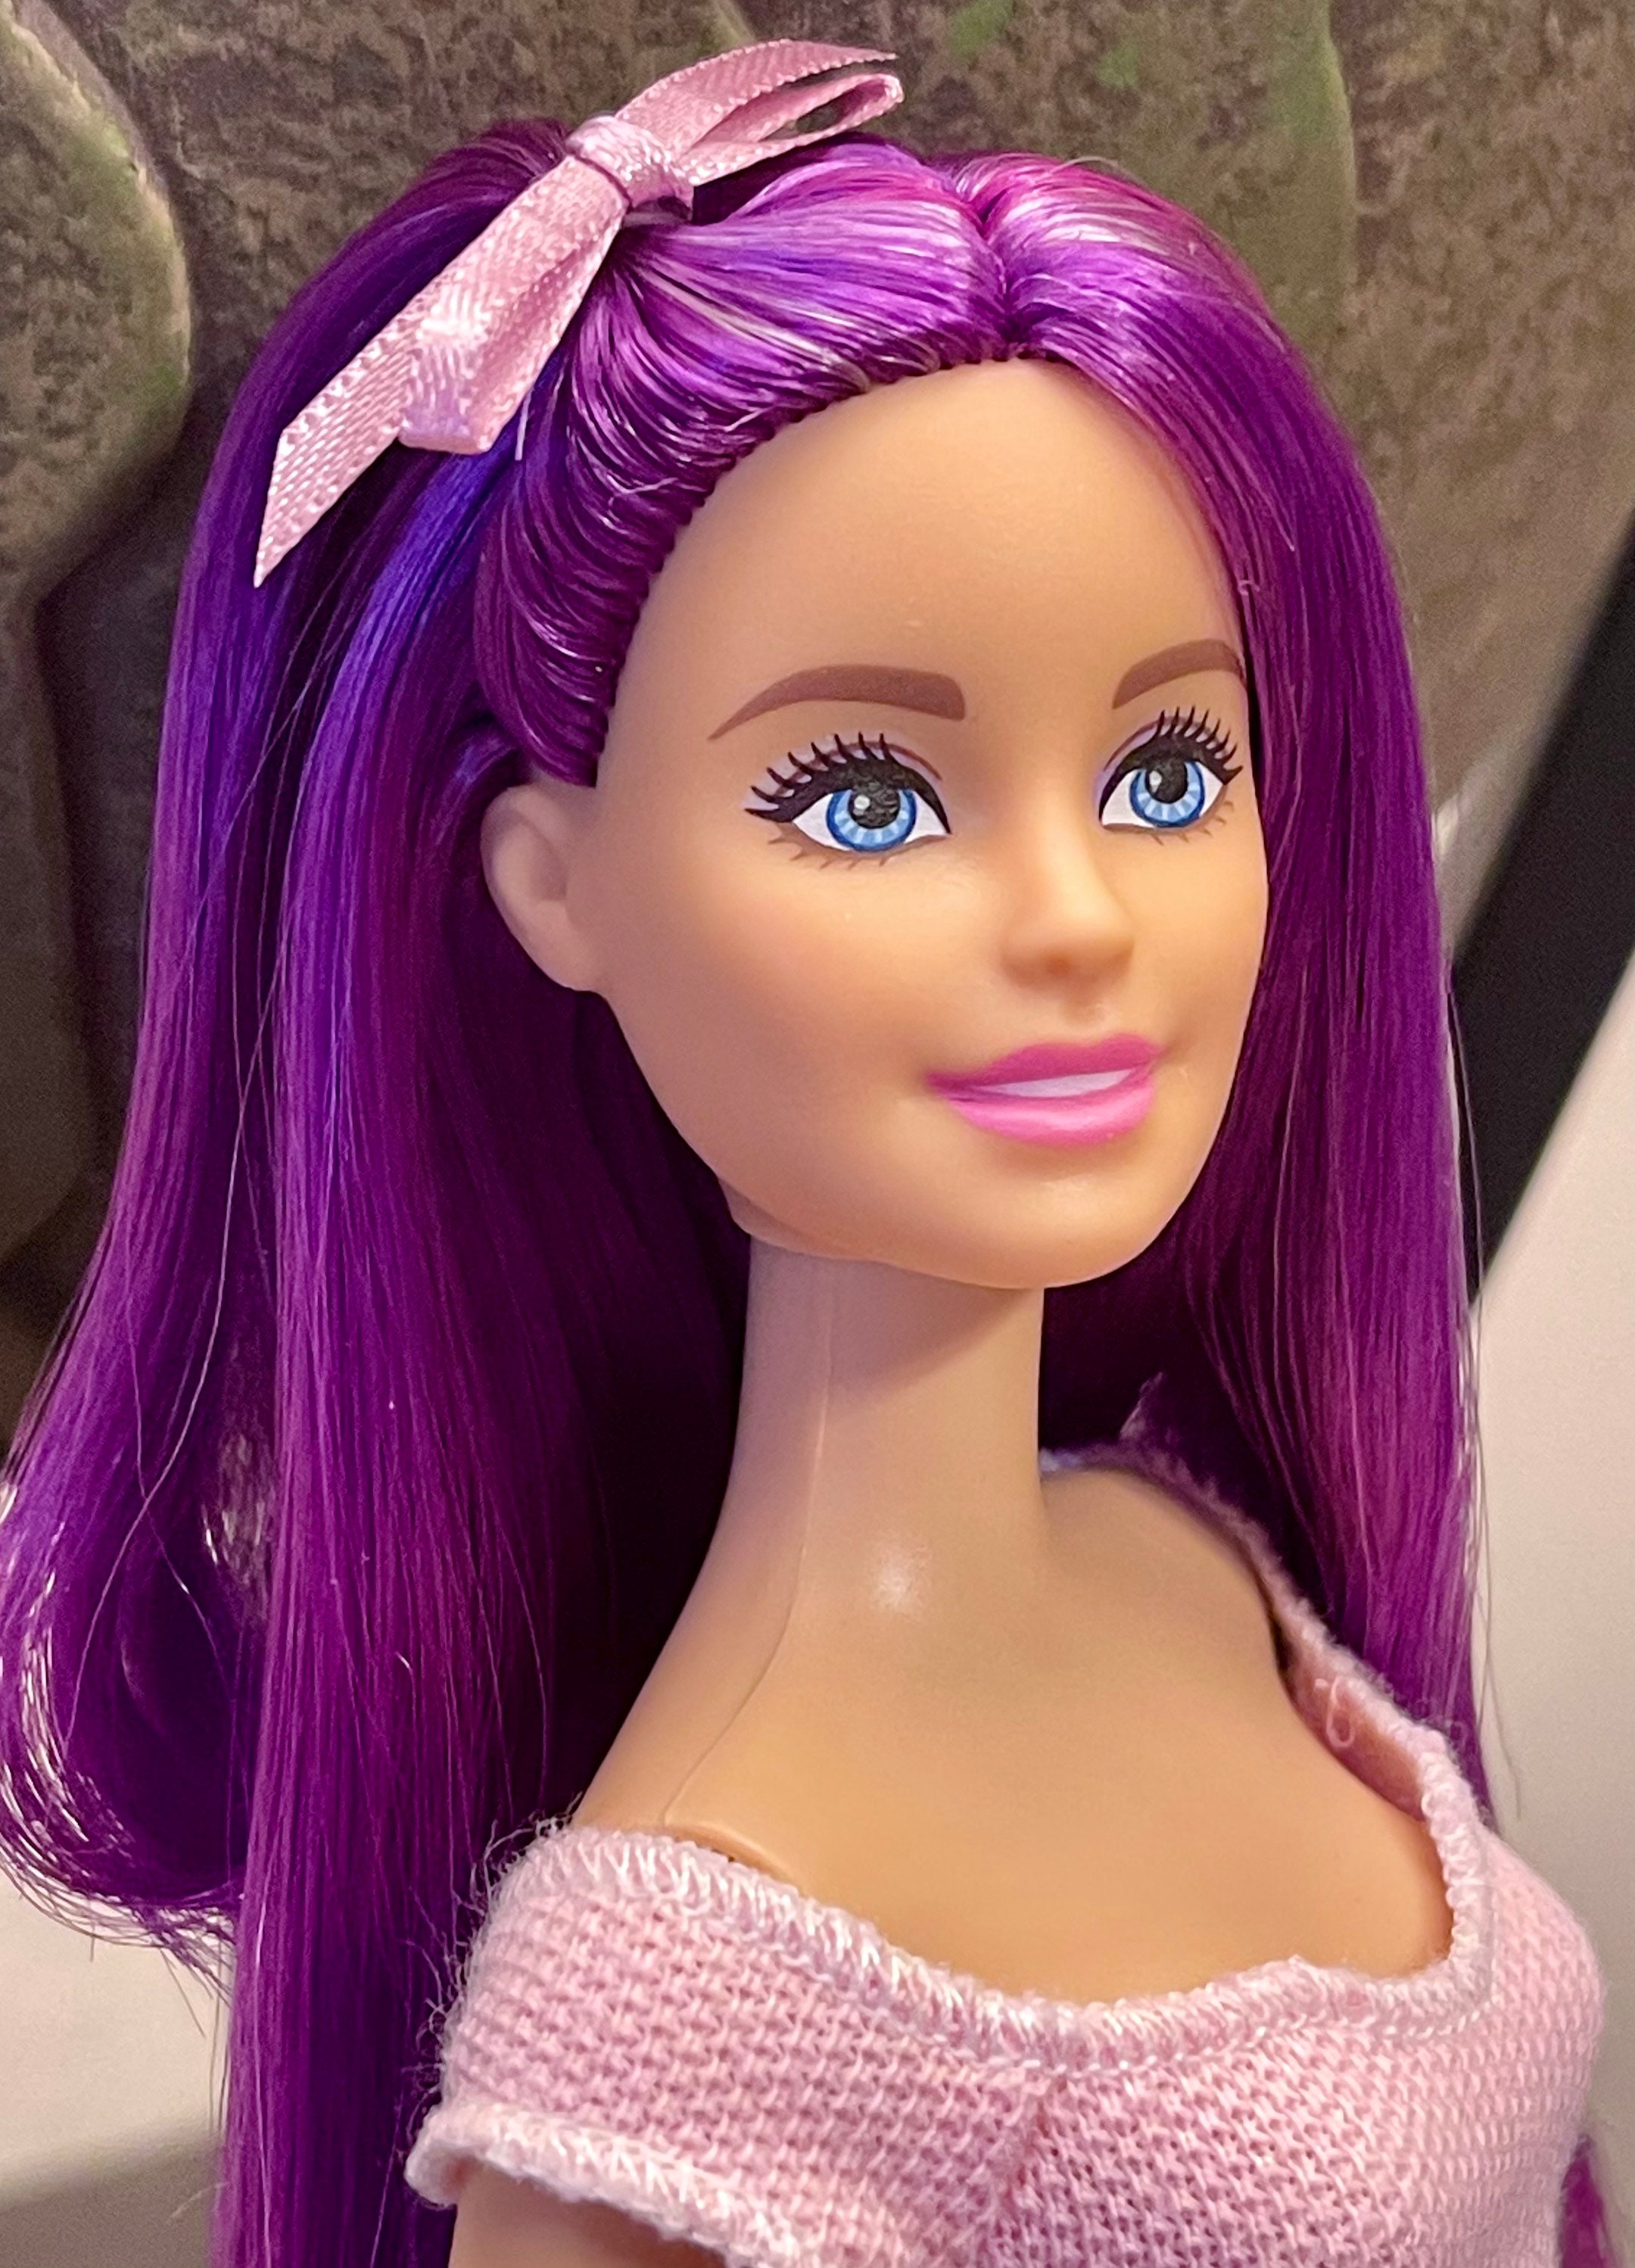 Barbie Doll Barbara Millicent Roberts Ooak Reroot Fashionista Etsy